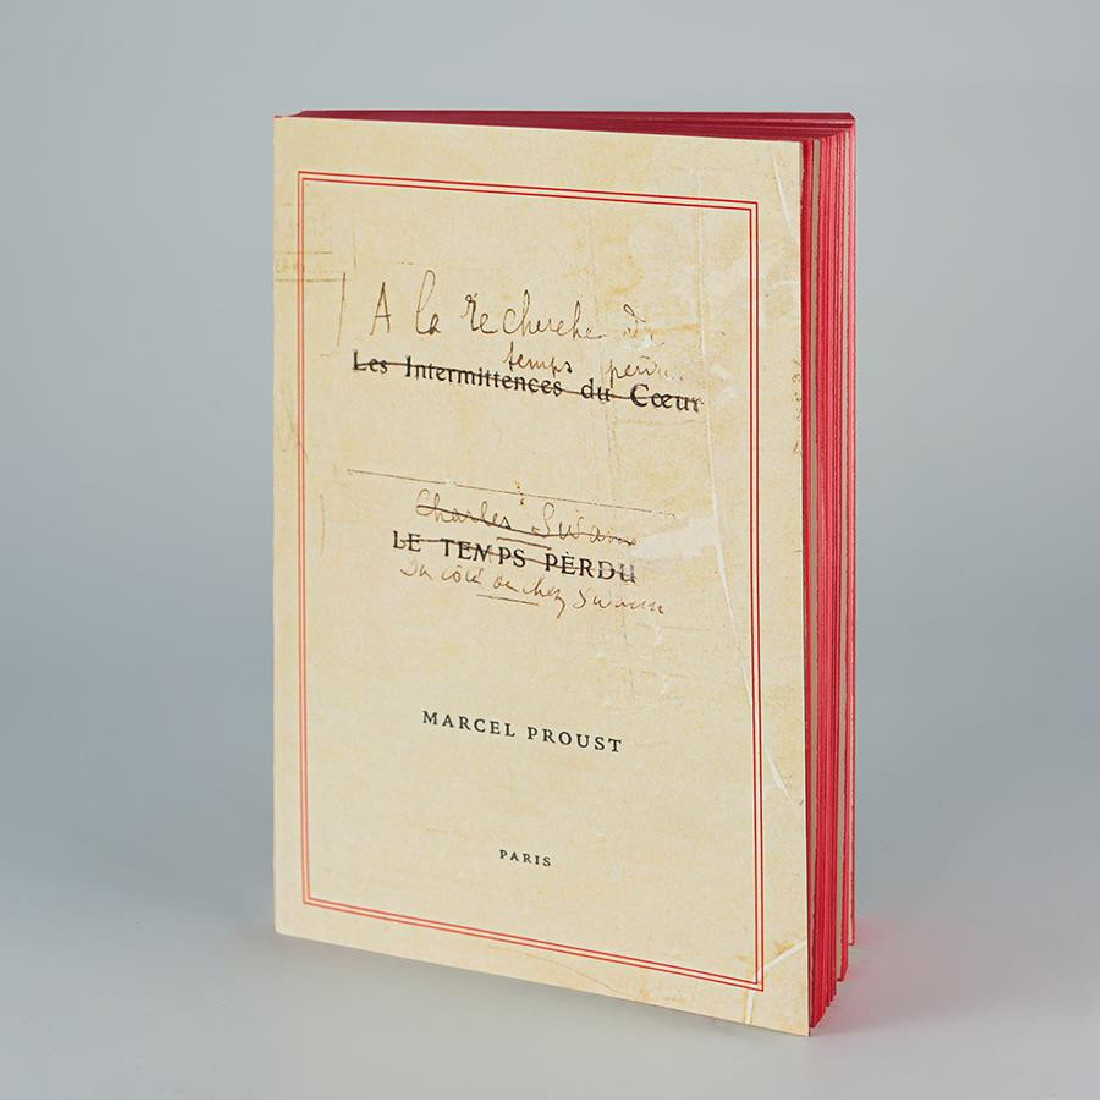 ANTIQUE NOTEBOOK La recherche Marcel Proust LIBRI MUTI